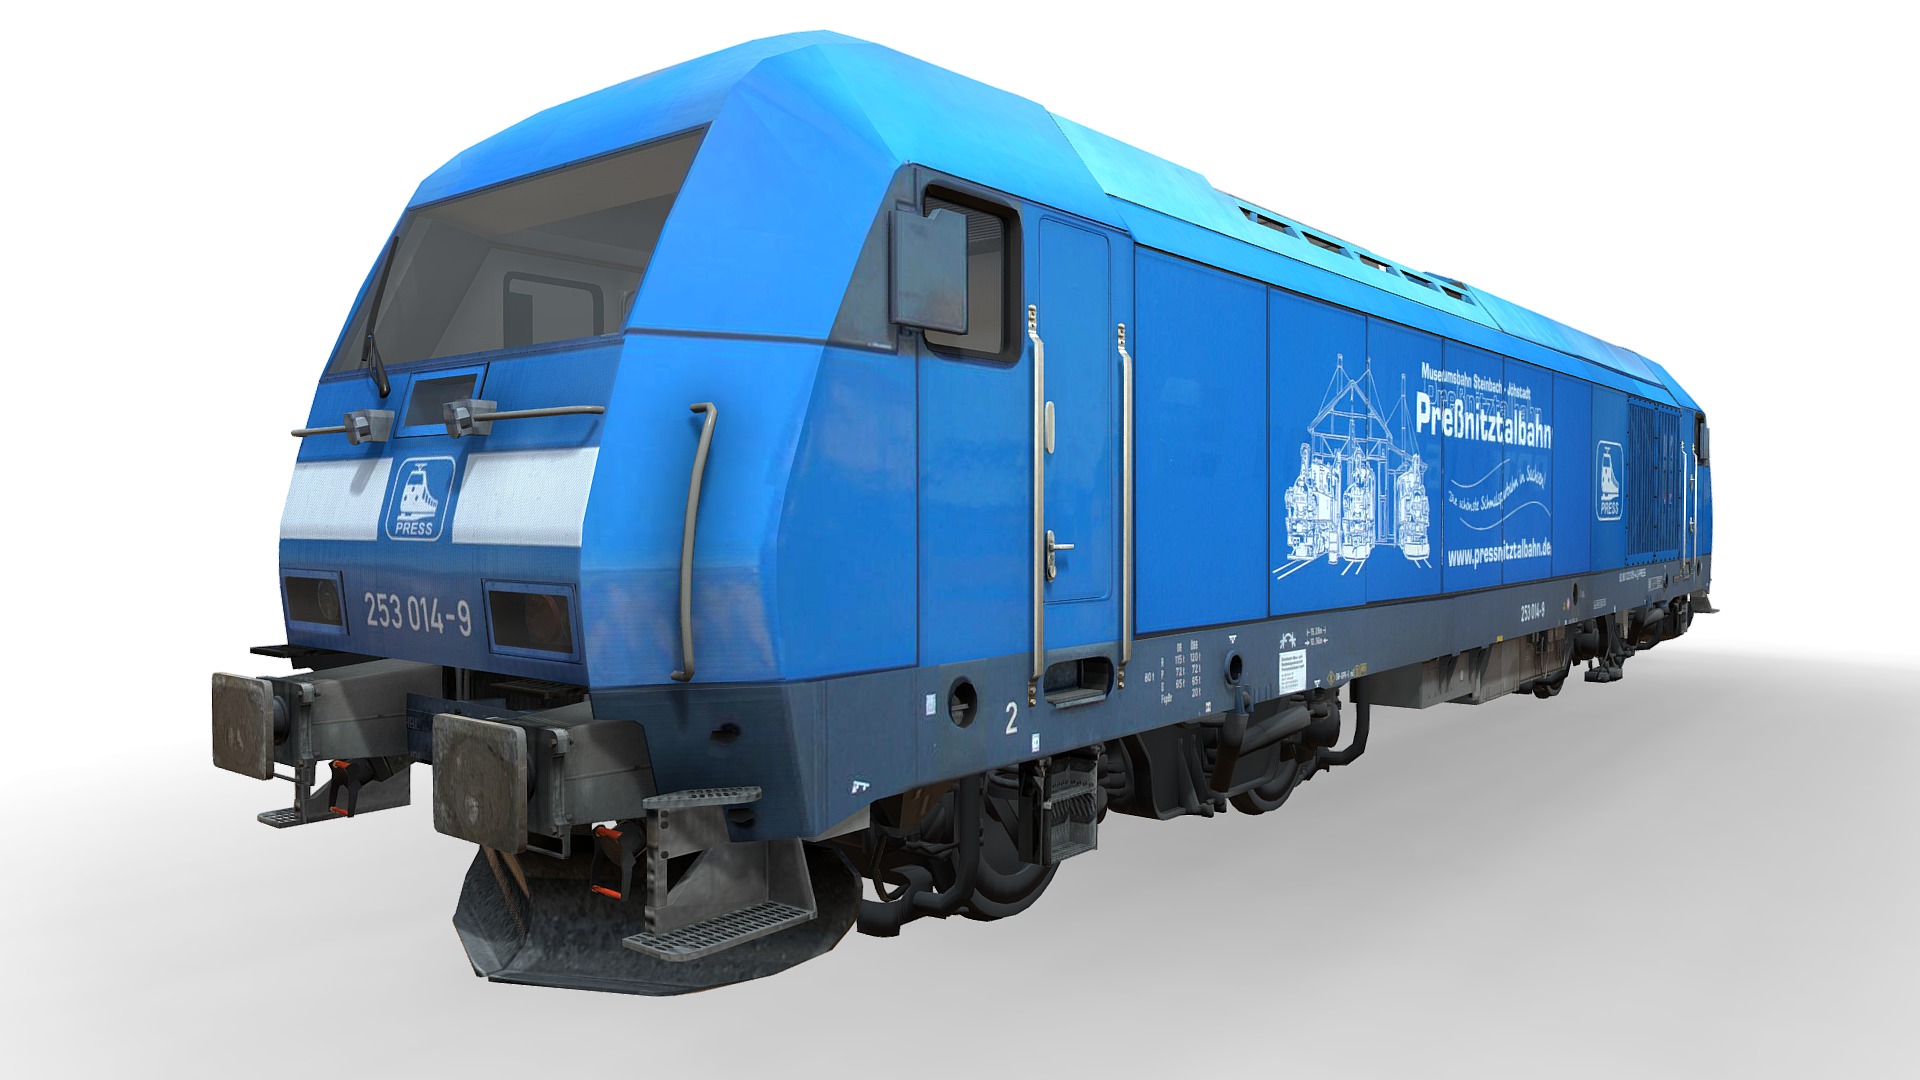 3D model Locomotive Class 223 – ER20-014 – PRESS - This is a 3D model of the Locomotive Class 223 - ER20-014 - PRESS. The 3D model is about a blue train car.